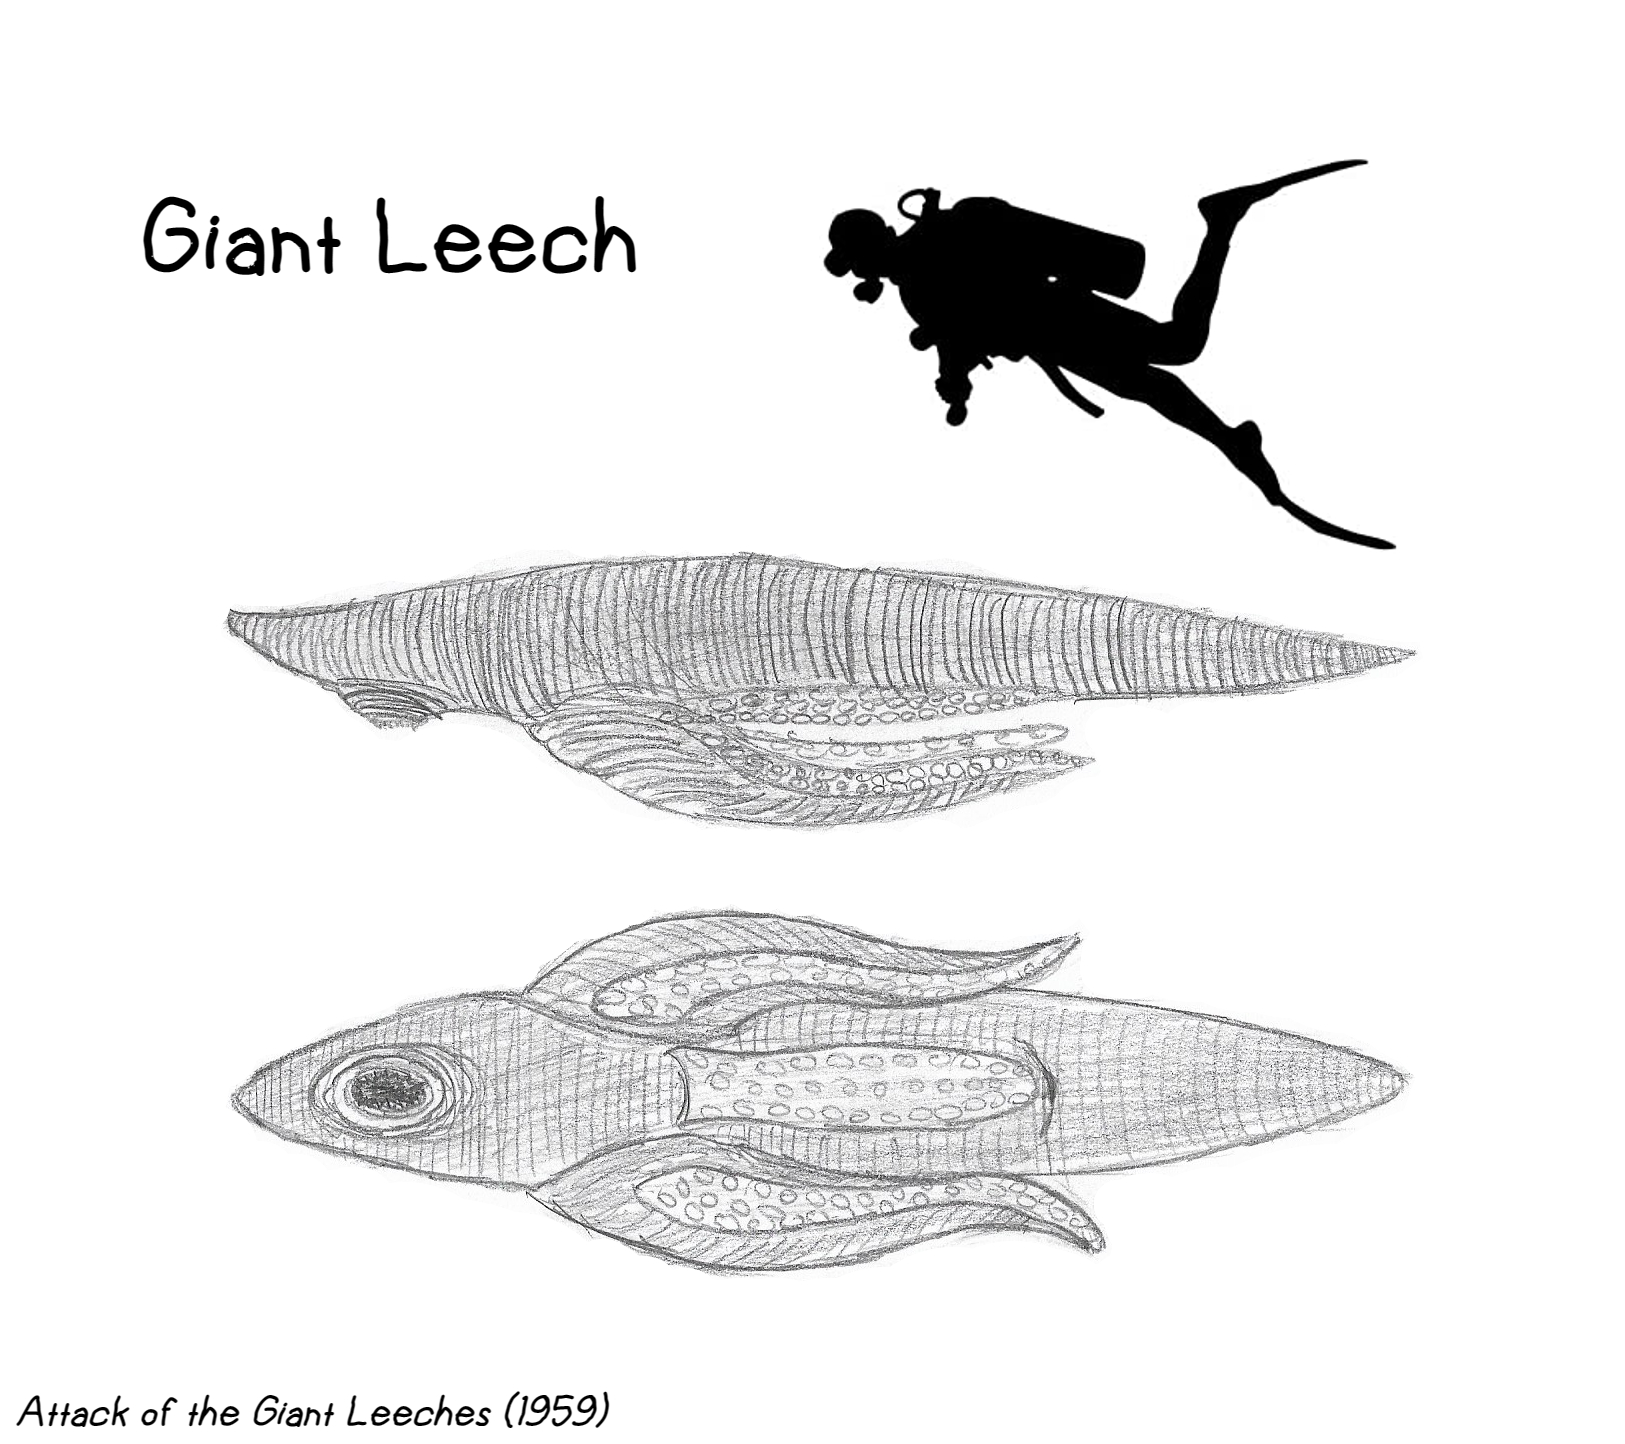 Movie Monster - Giant Leech by Creature-Studios on DeviantArt